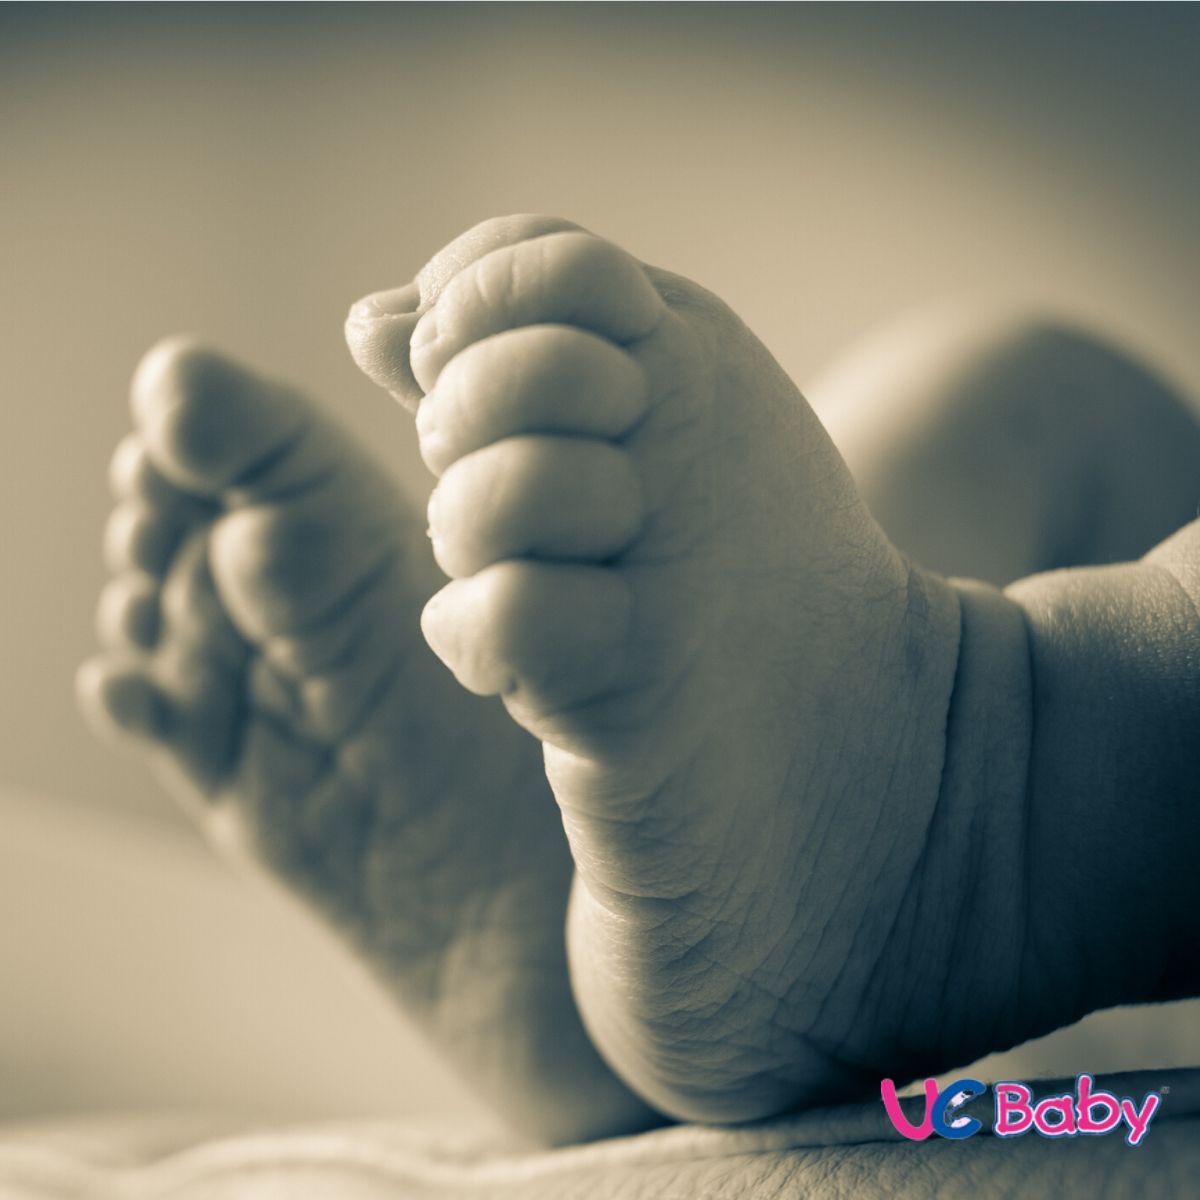 Blog UCBABY Newborn Photography ideas (5)